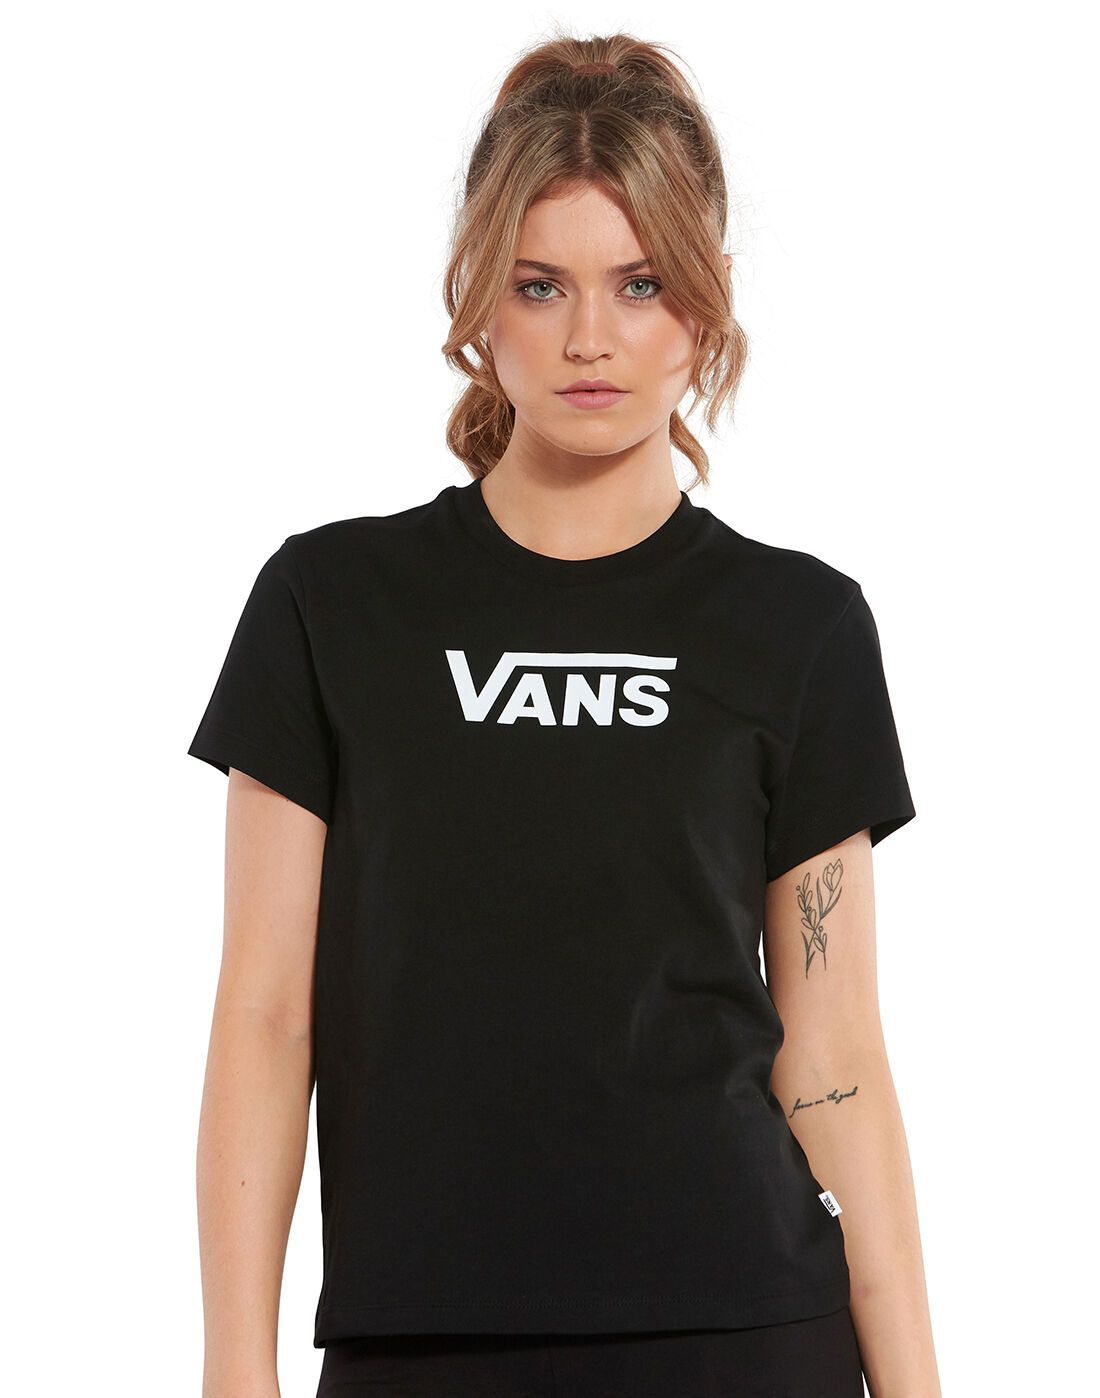 vans t shirt womens uk